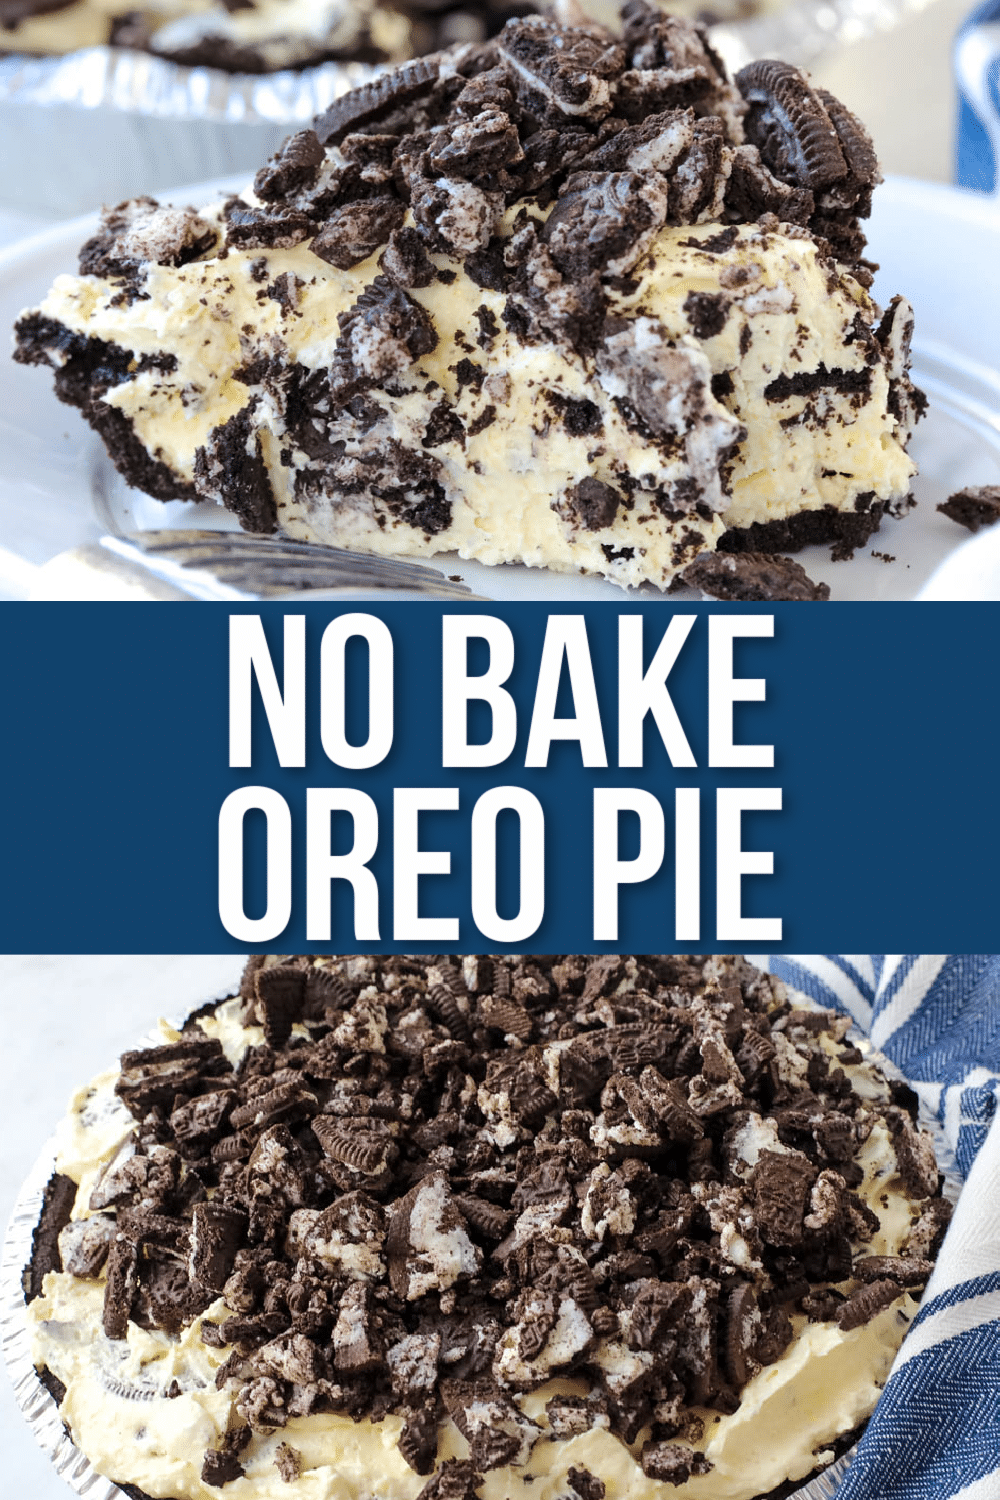 Oreo Pie - All Things Mamma - Easy Oreo Dessert Recipe